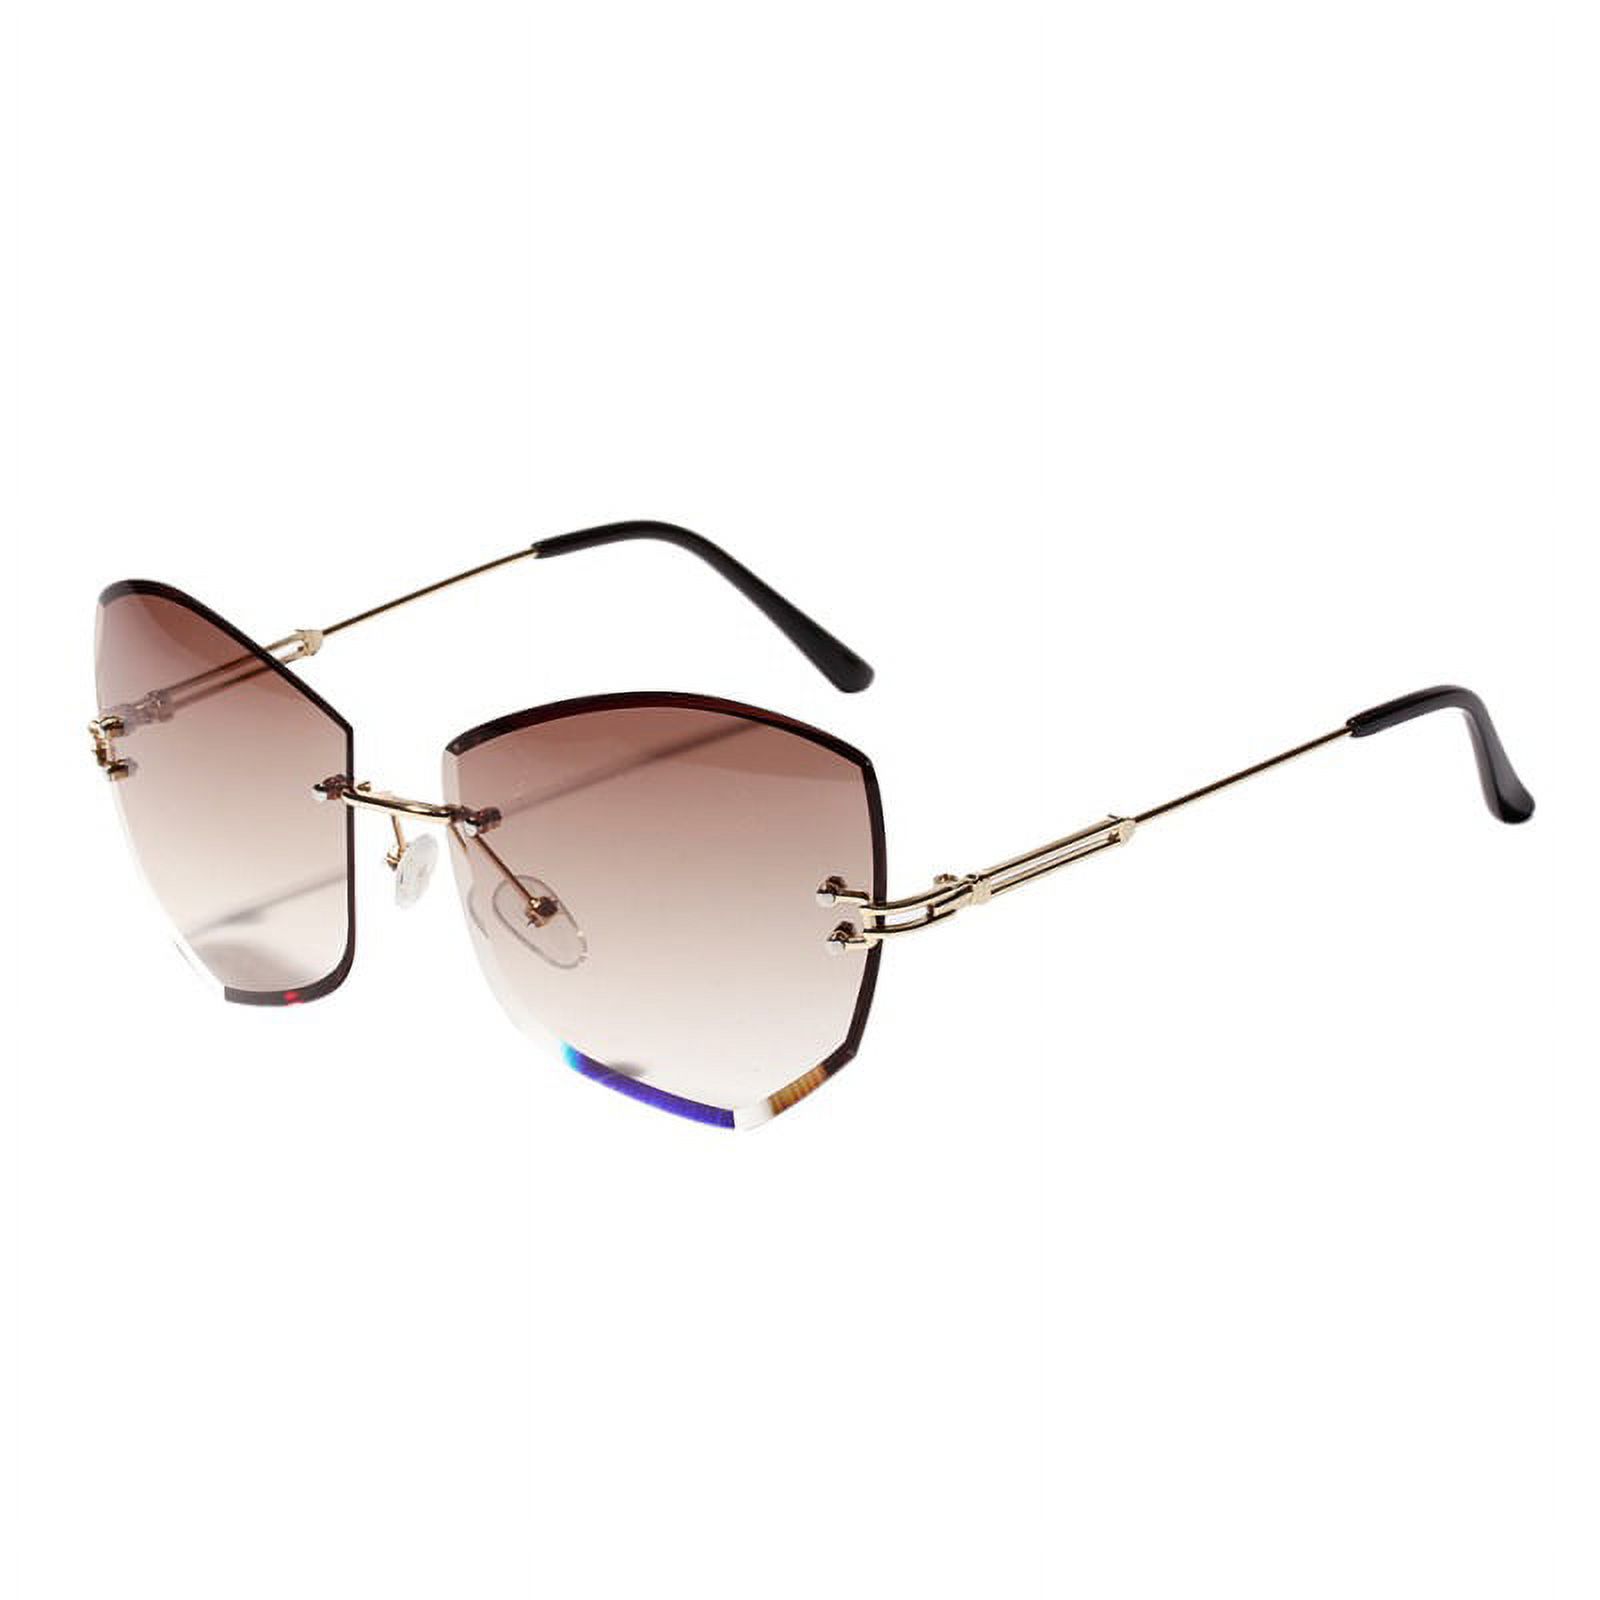 Women Shades Rimless Sunglasses Cat Eye Diamond-shaped Lens Sunglass Metal Frame Sunglasses for Women Men - image 1 of 5